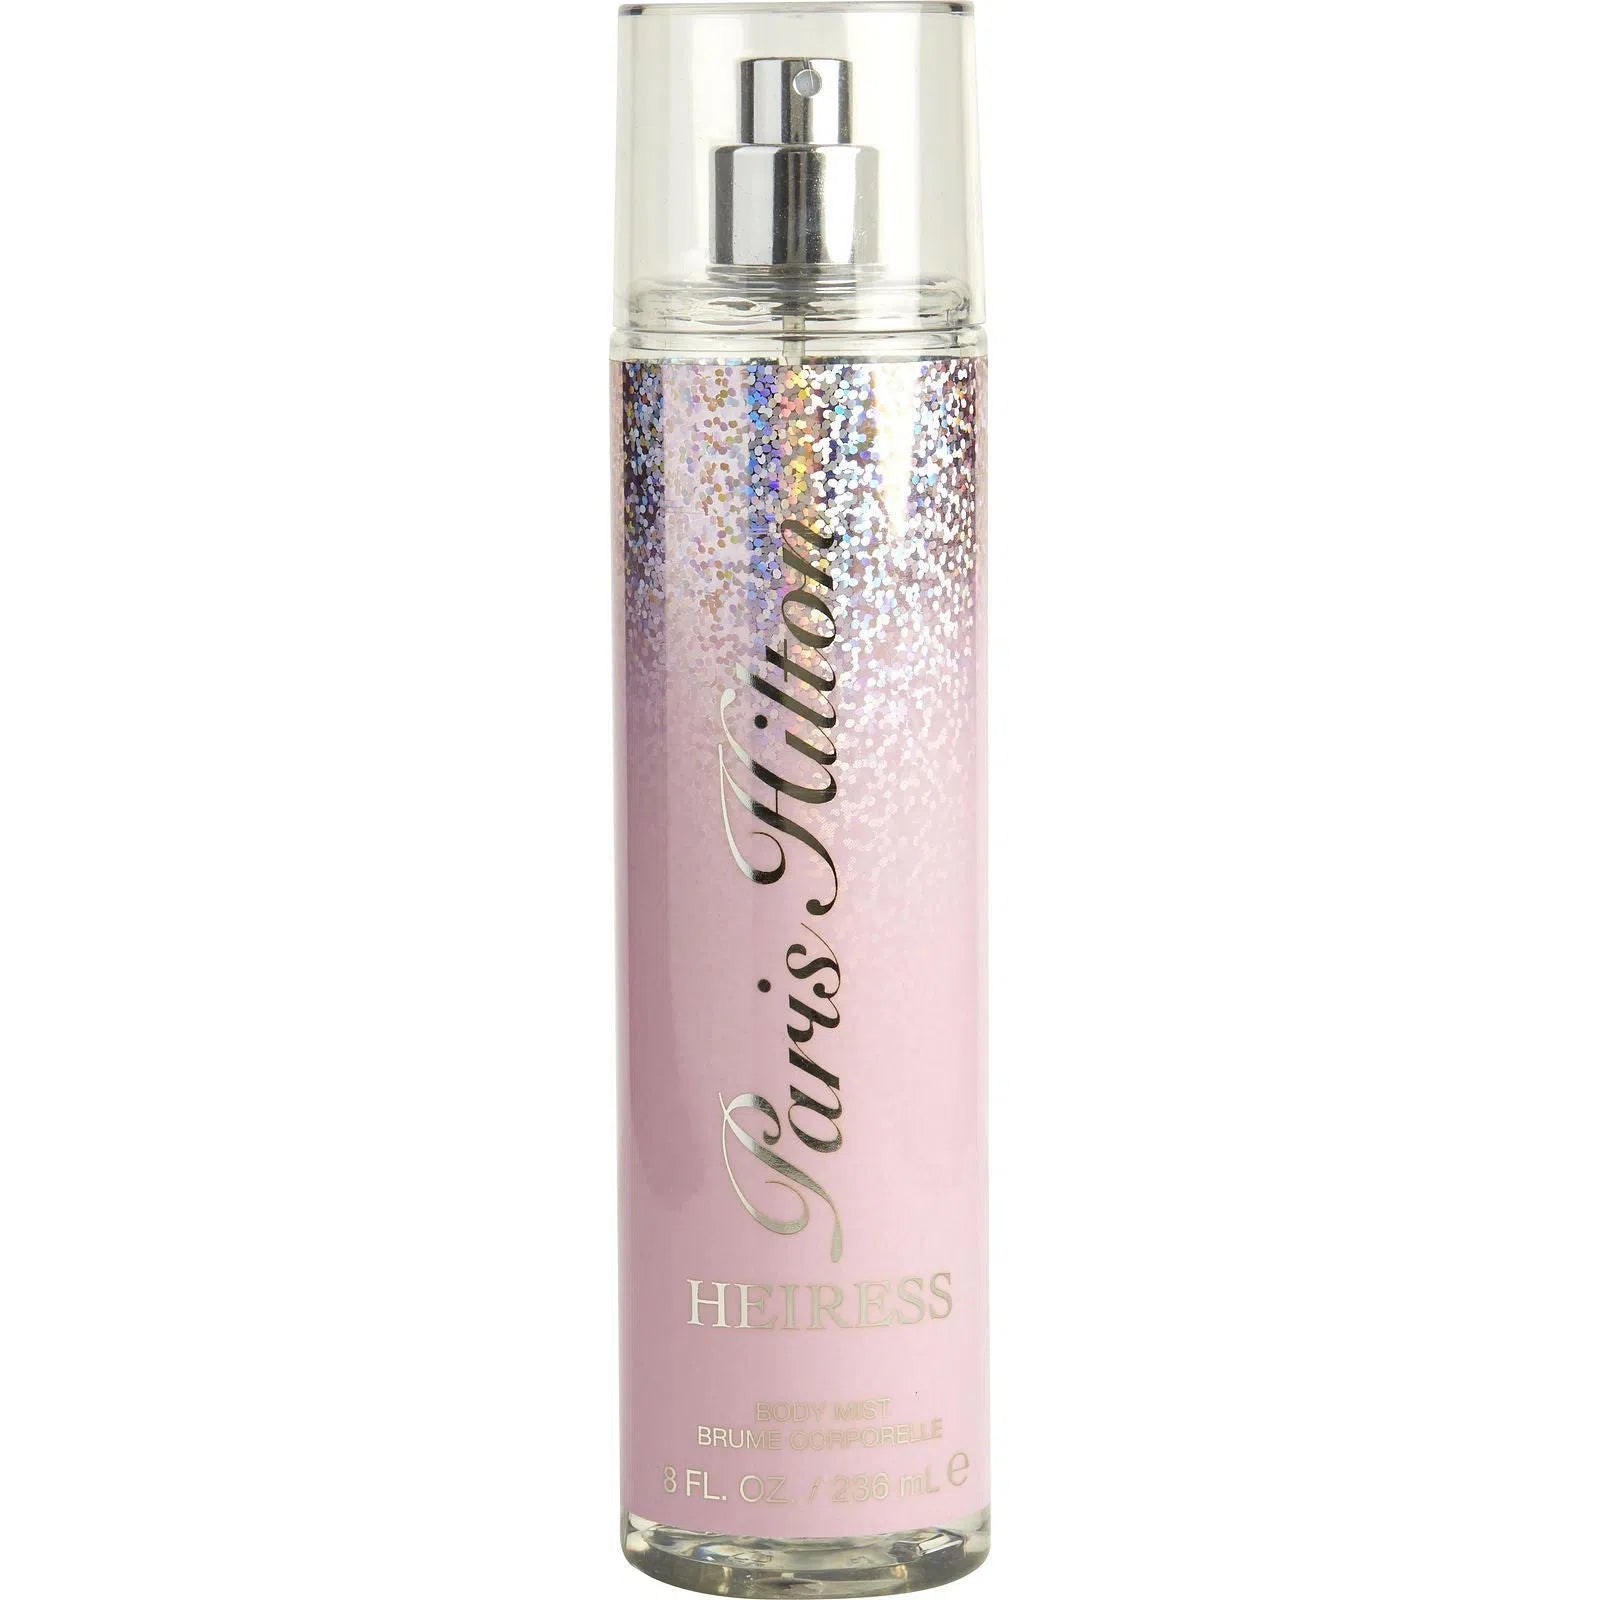 Body Mist Paris Hilton Heiress Body Mist (W) / 236 ml - 883991110886- Prive Perfumes Honduras